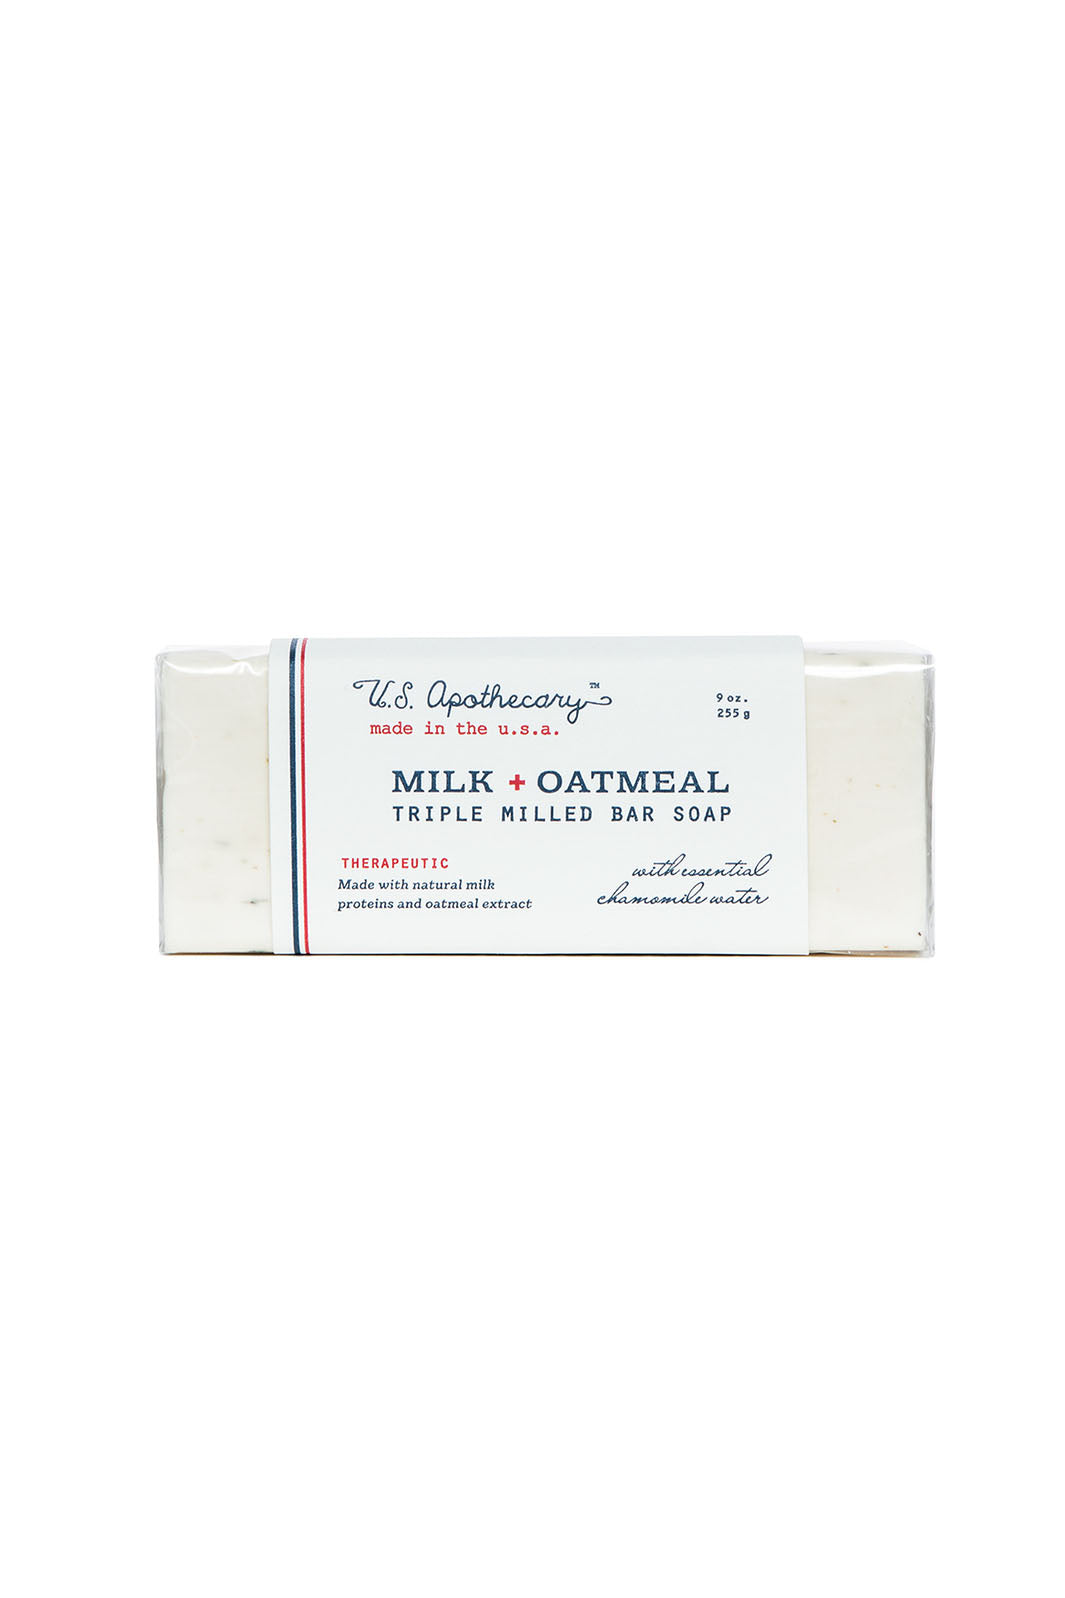 Milk + Oatmeal Triple Milled Bar Soap, 9 oz.